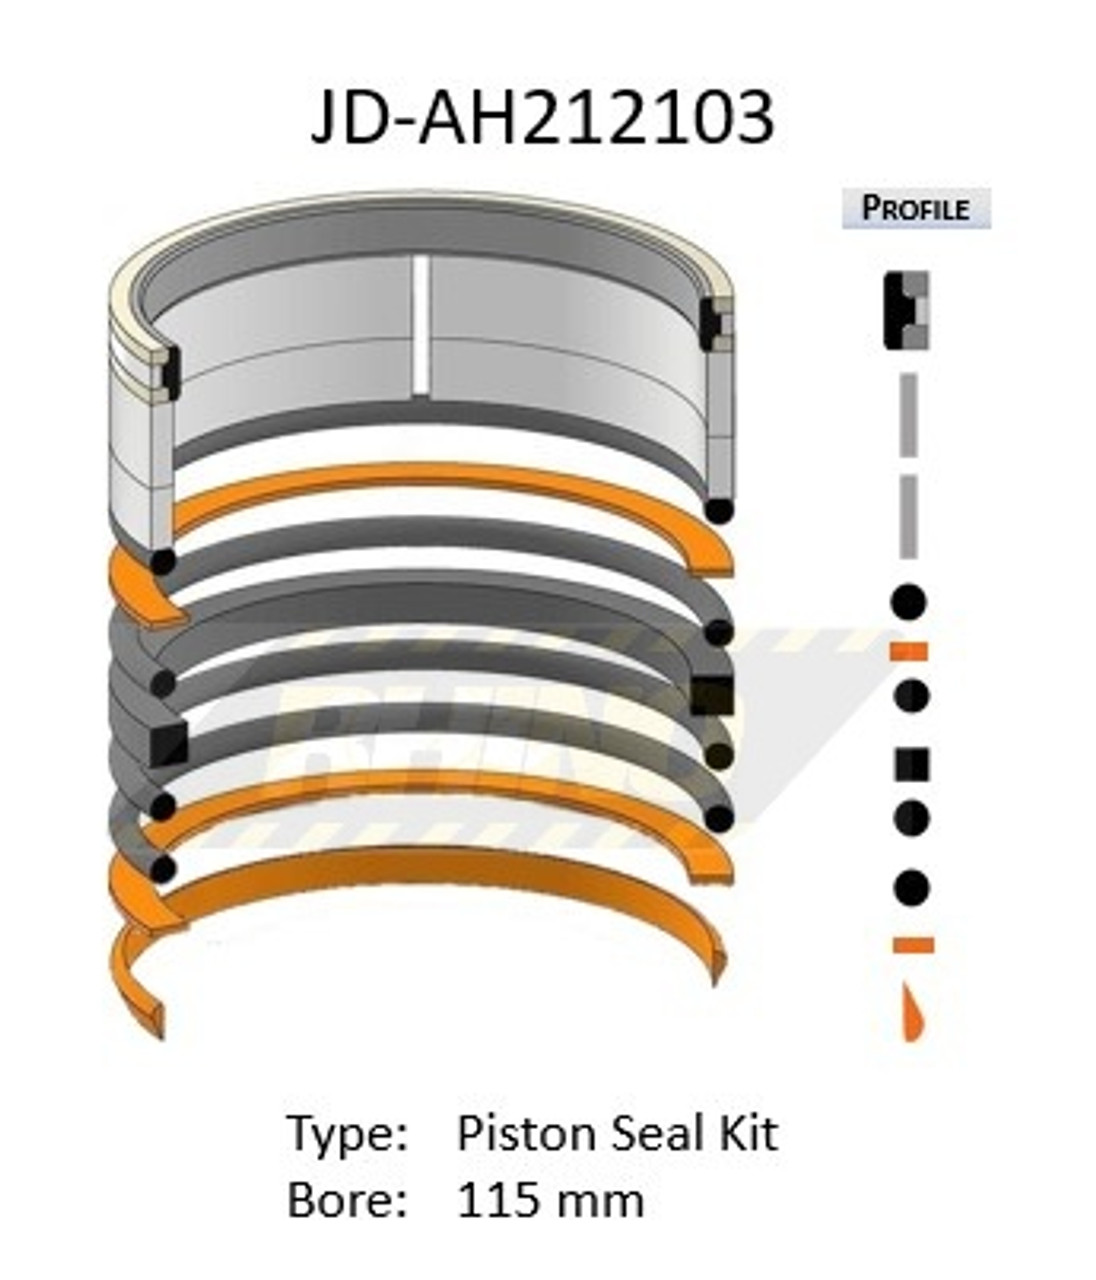 JD-AH212103, John Deere Seal Kit